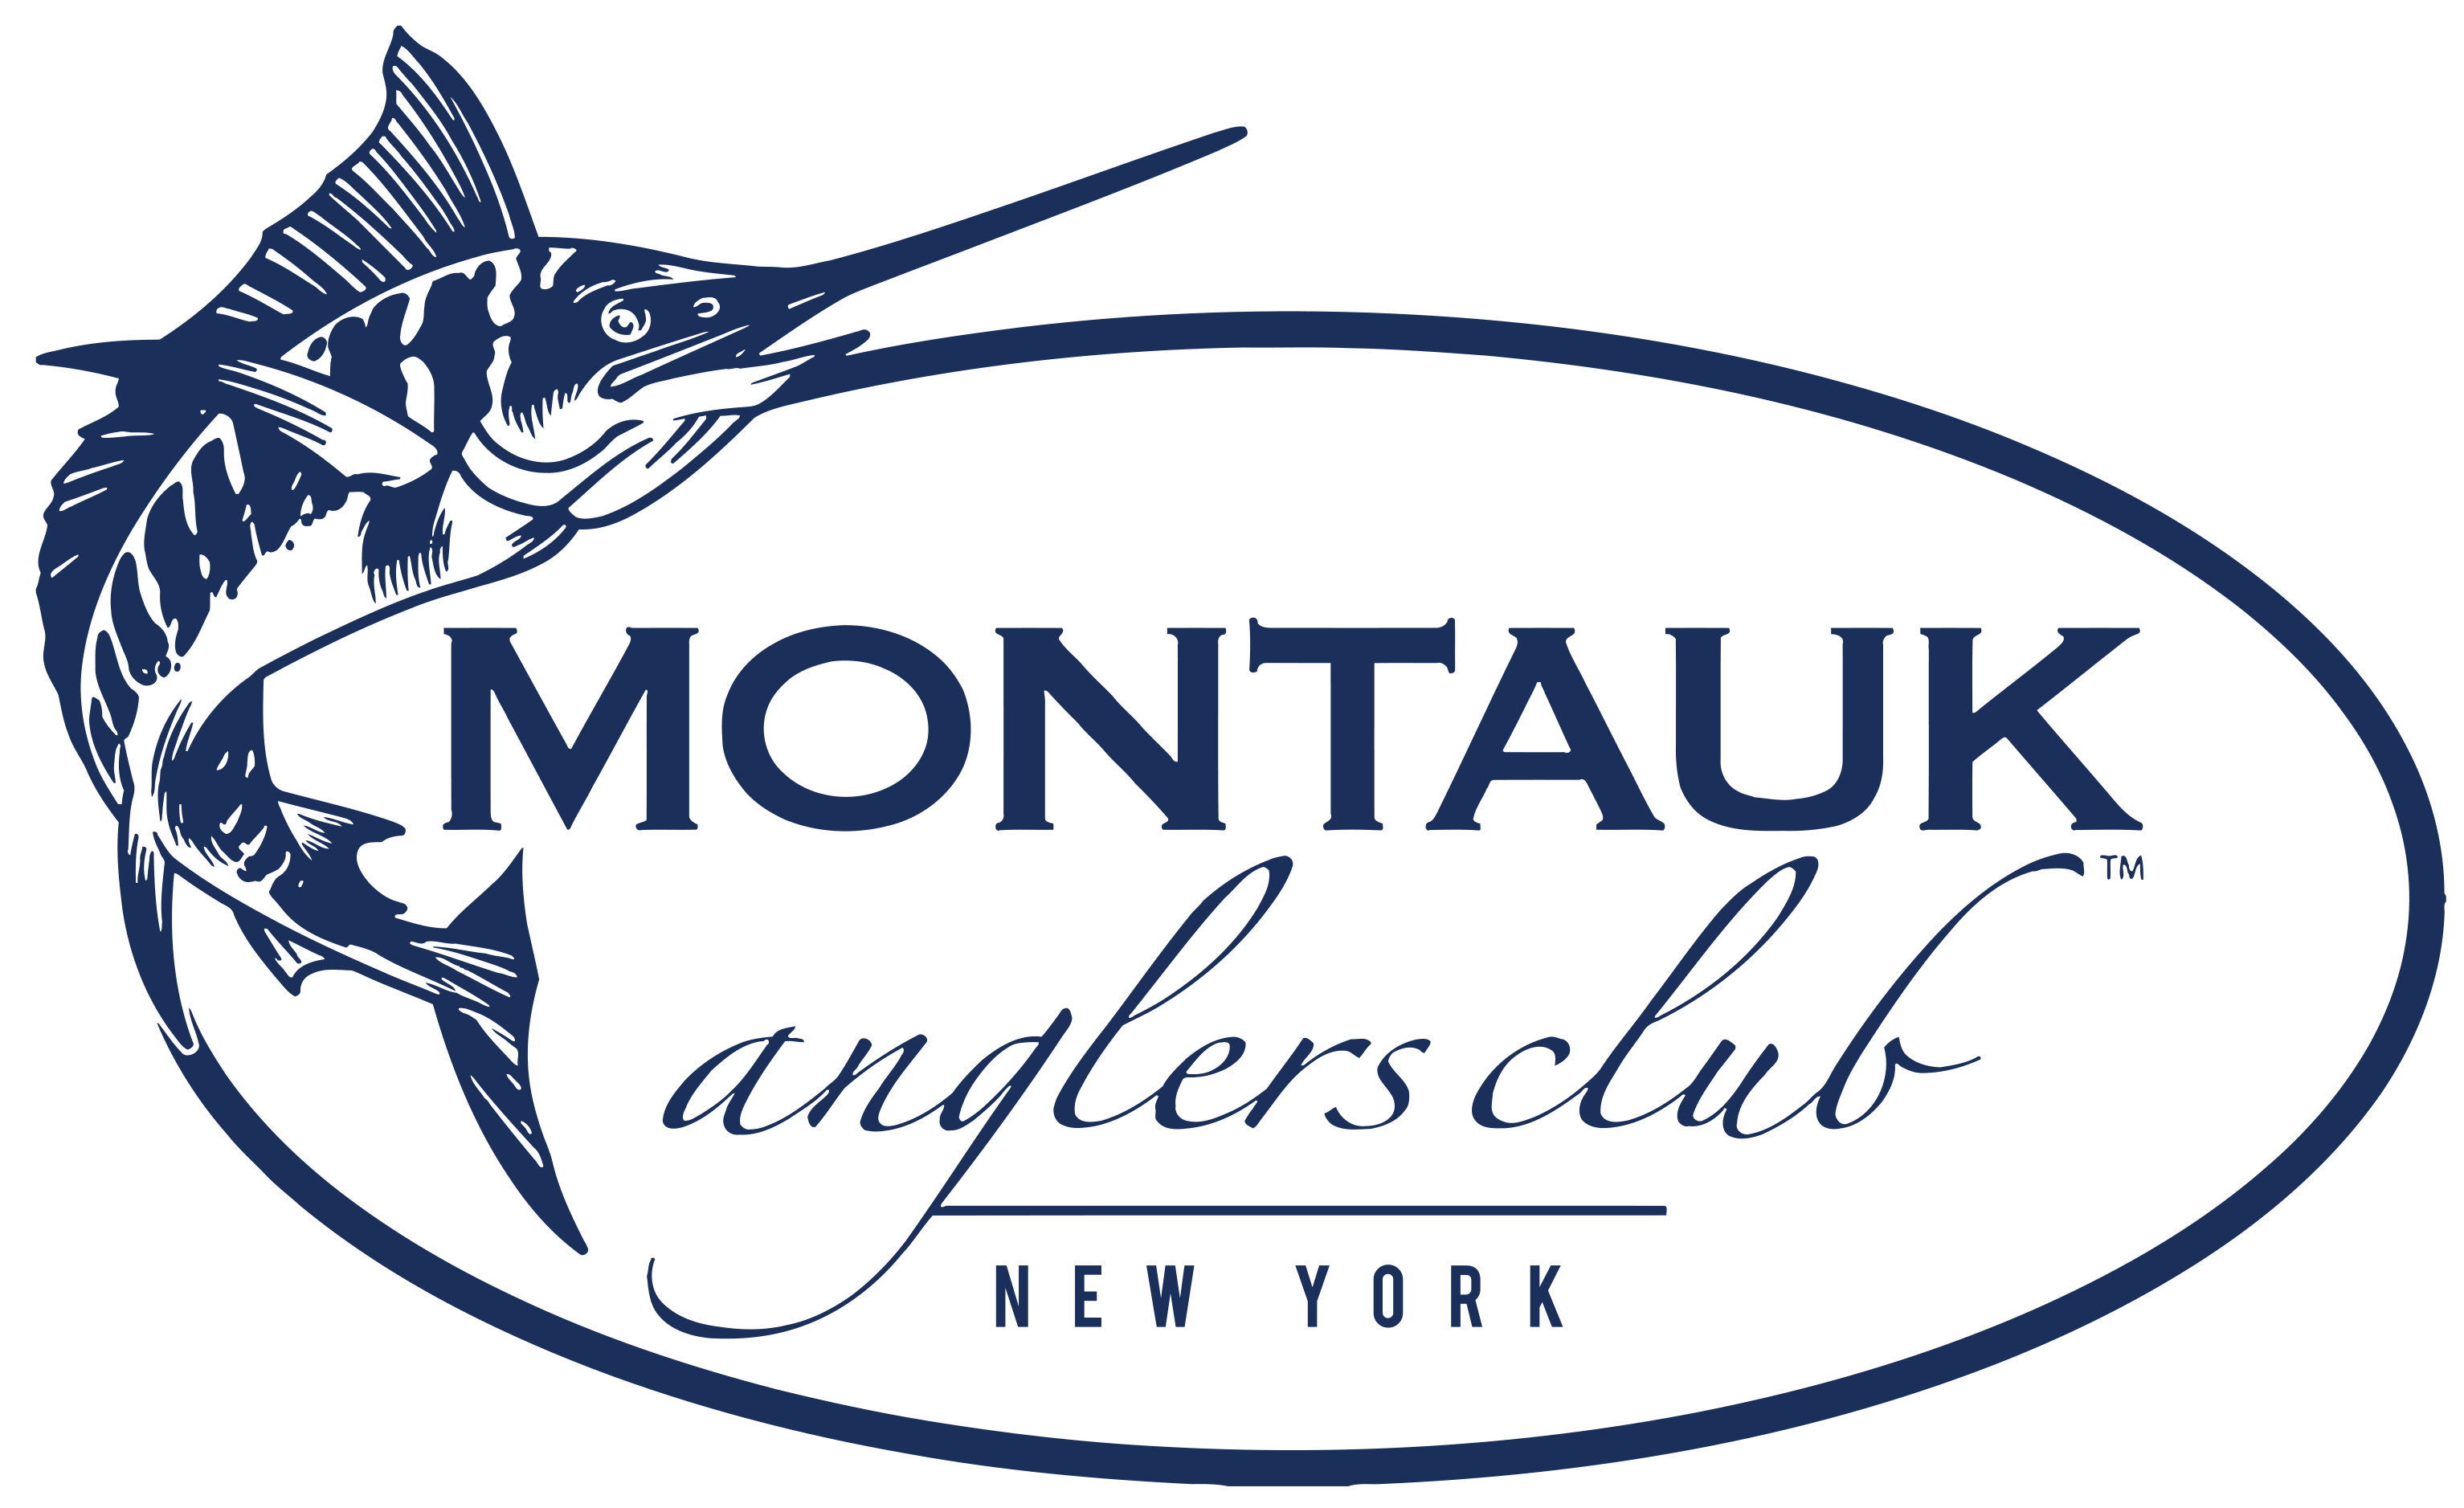 Montauk Anglers Club